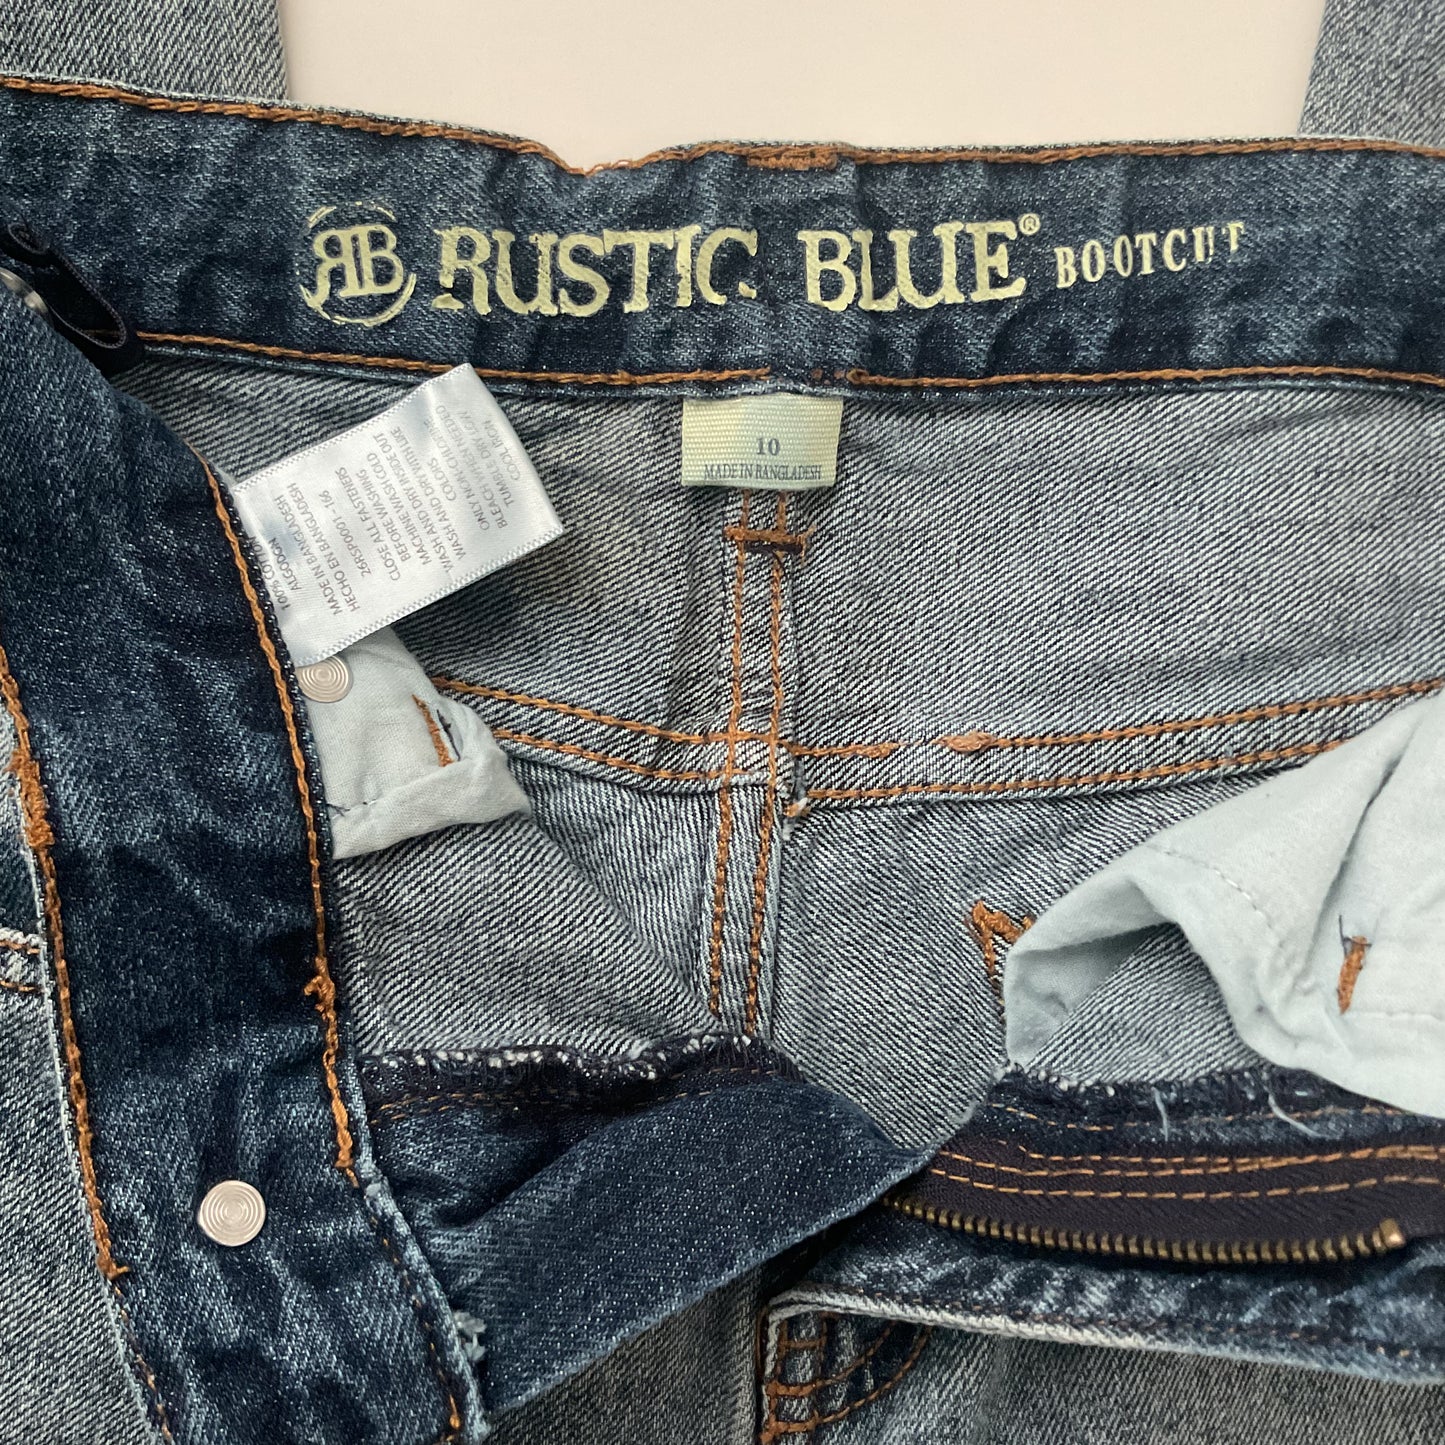 Rustic Blue Bootcut Boys Jeans Size 10.